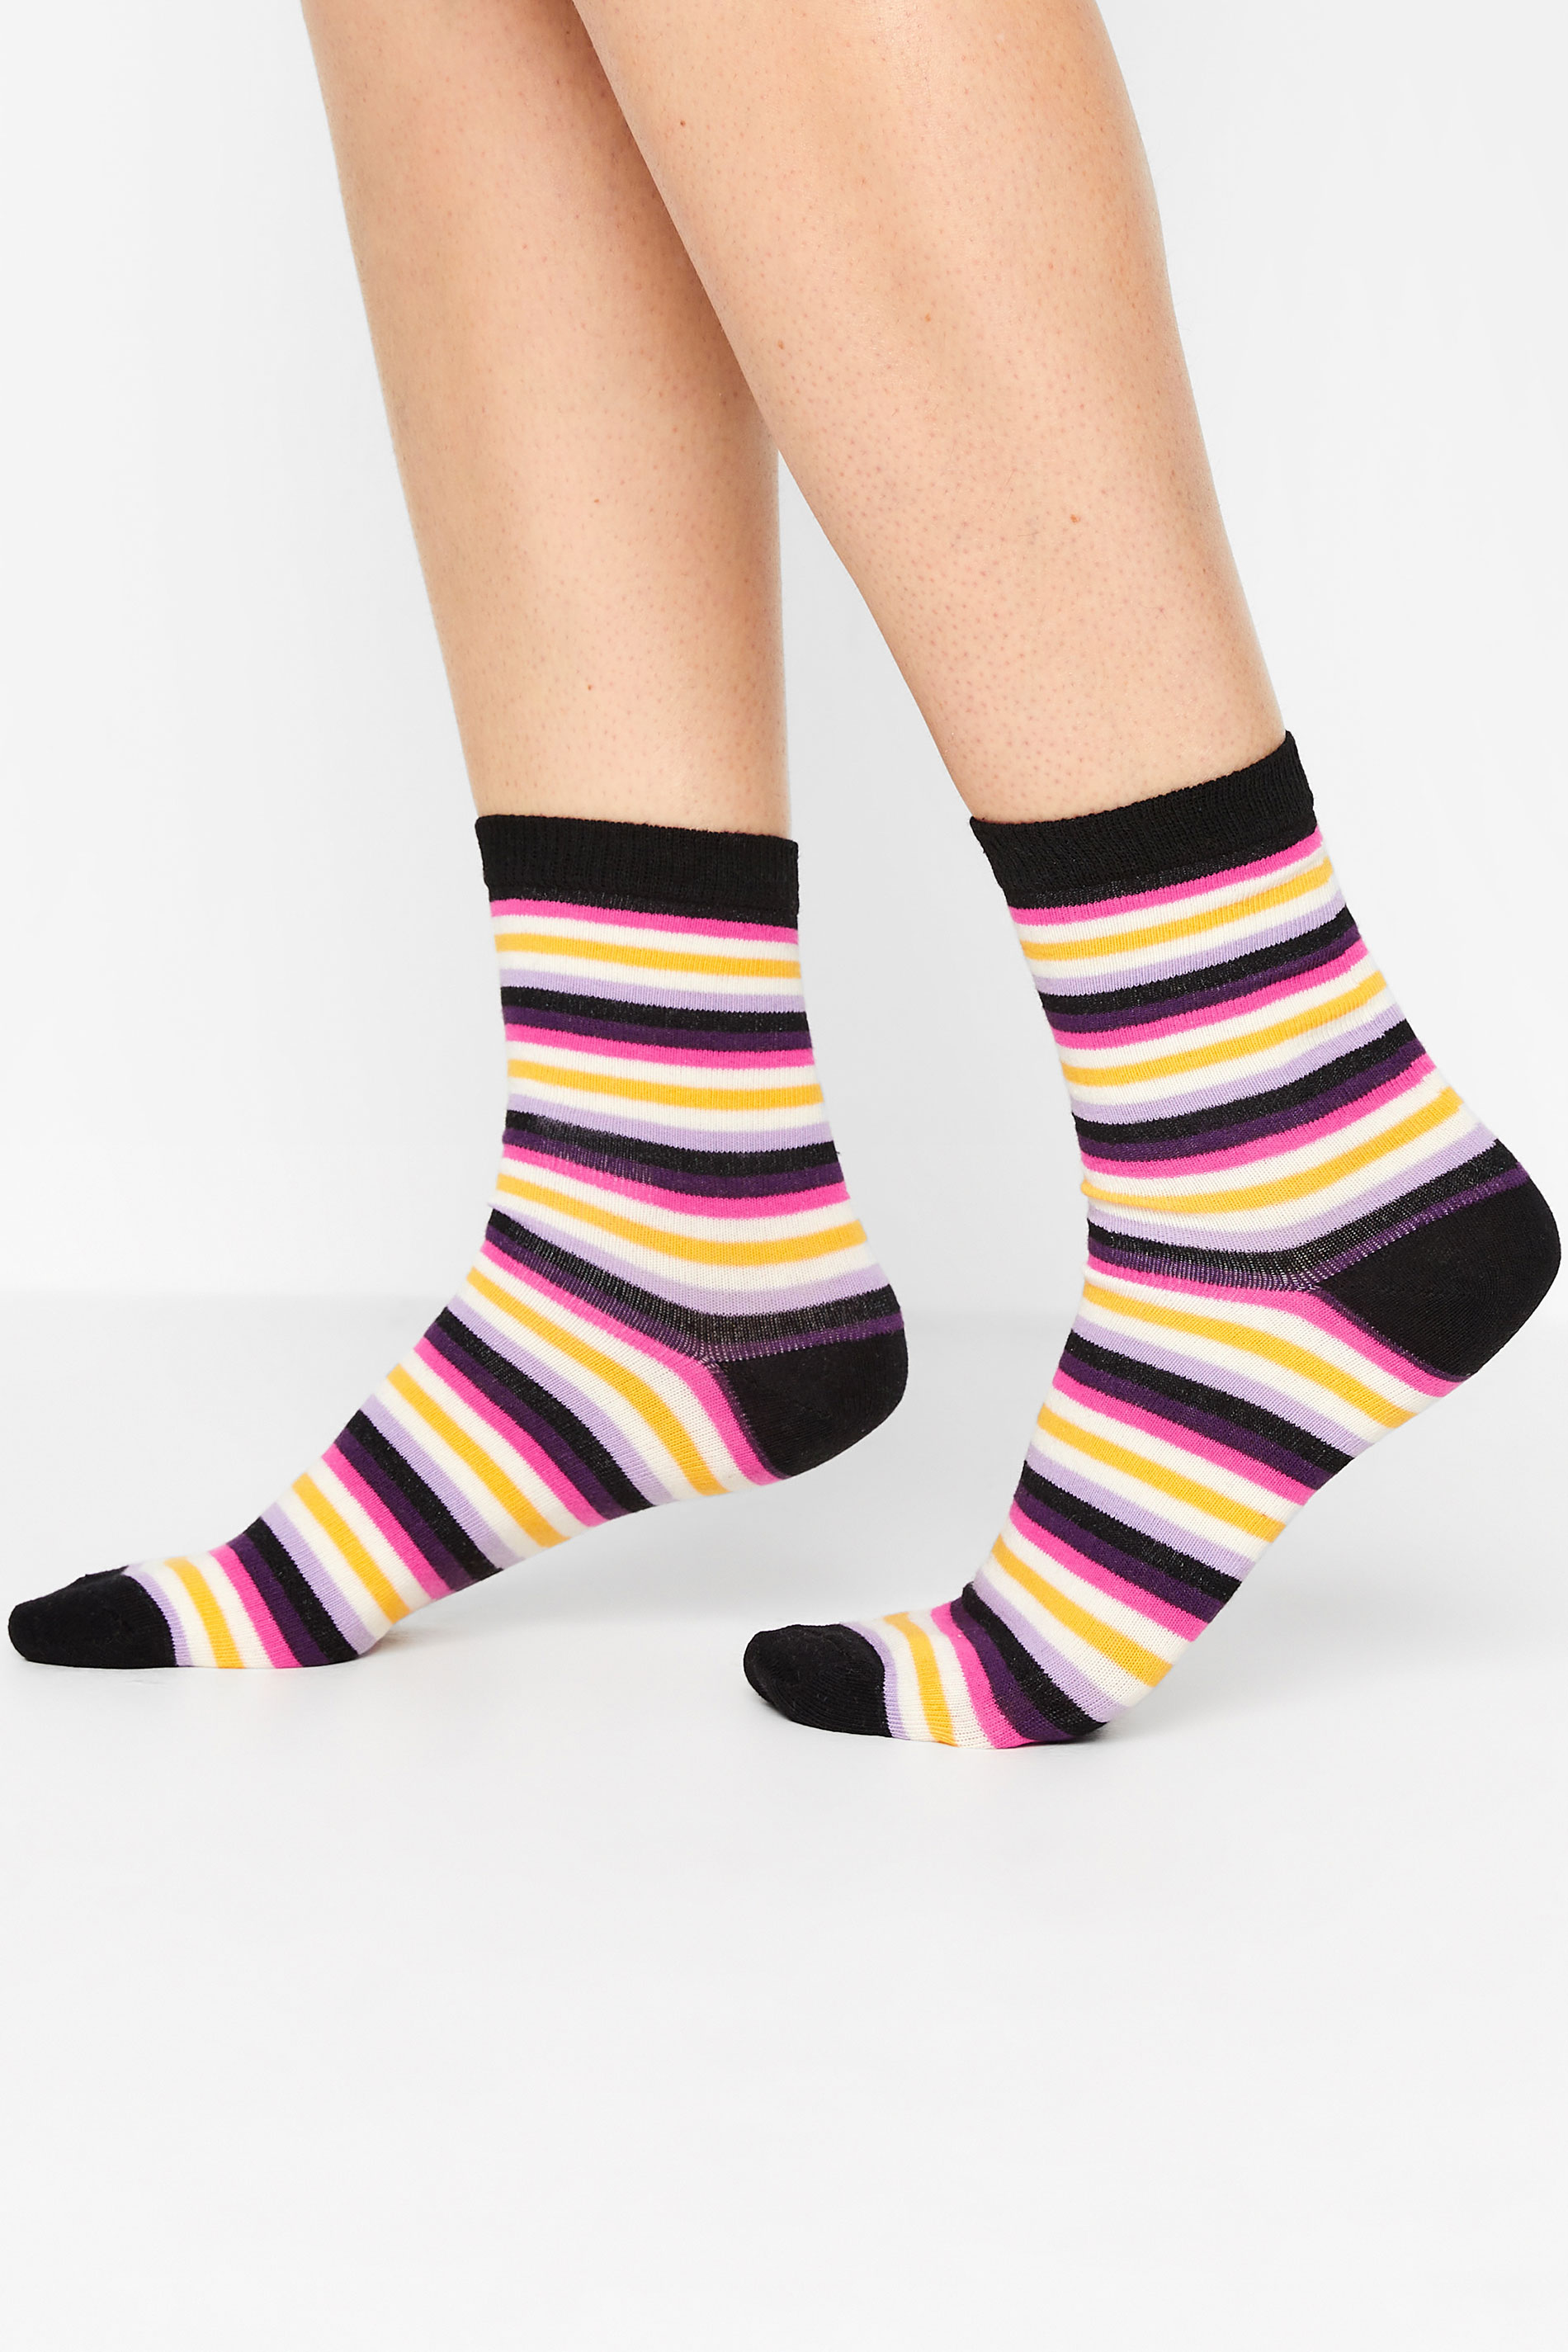 LTS Tall Women's 3 PACK Star & Stripe Print Ankle Socks | Long Tall Sally 2